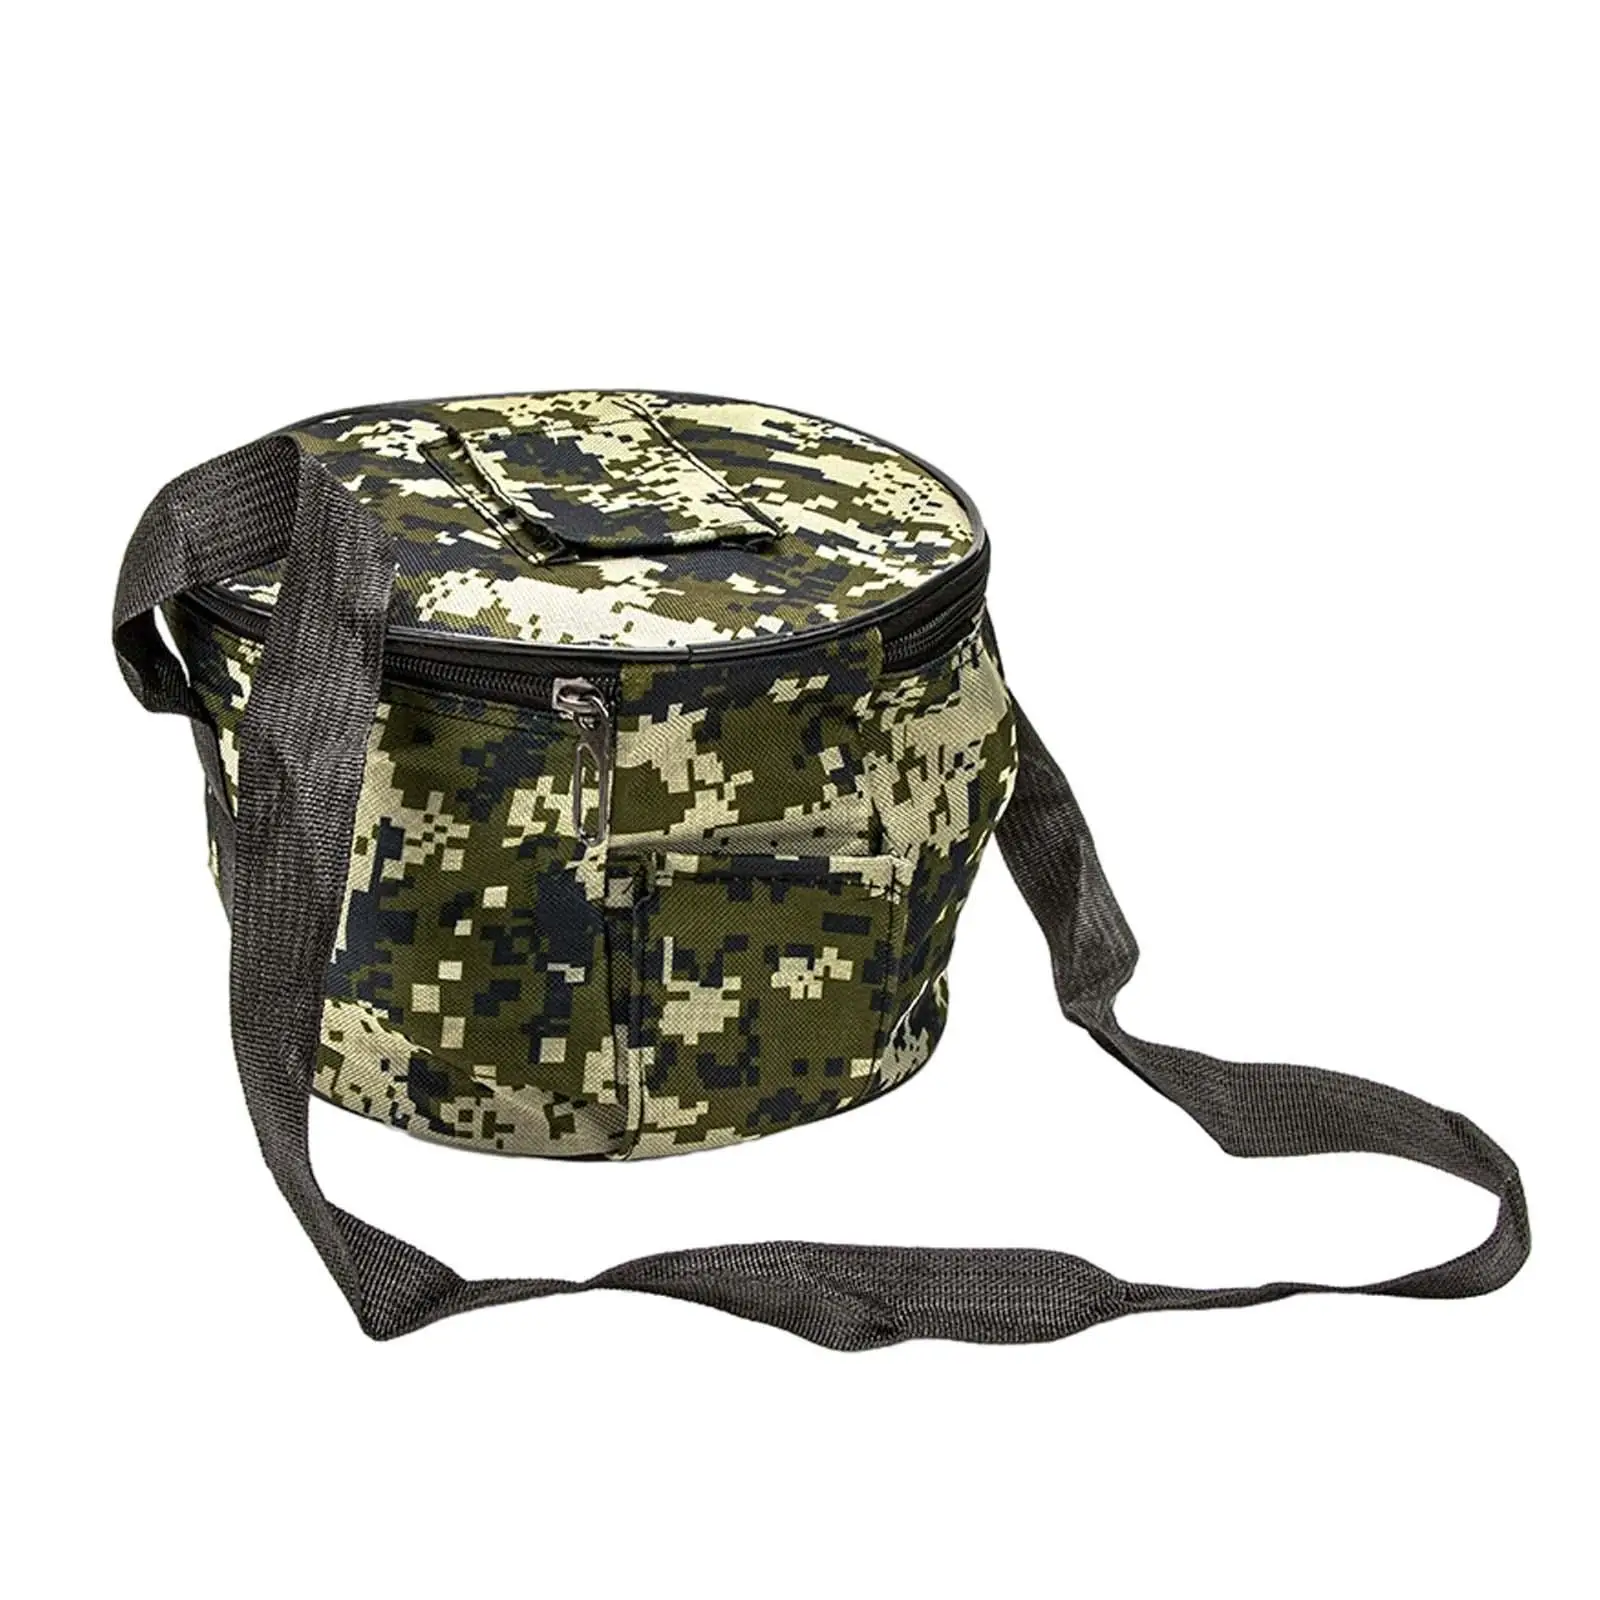 Fishing Tackle Bag Water Resistant Portable Handbag Multifunctional Oxford Fabric Shoulder Bag Organizer Fishing Accessories Bag